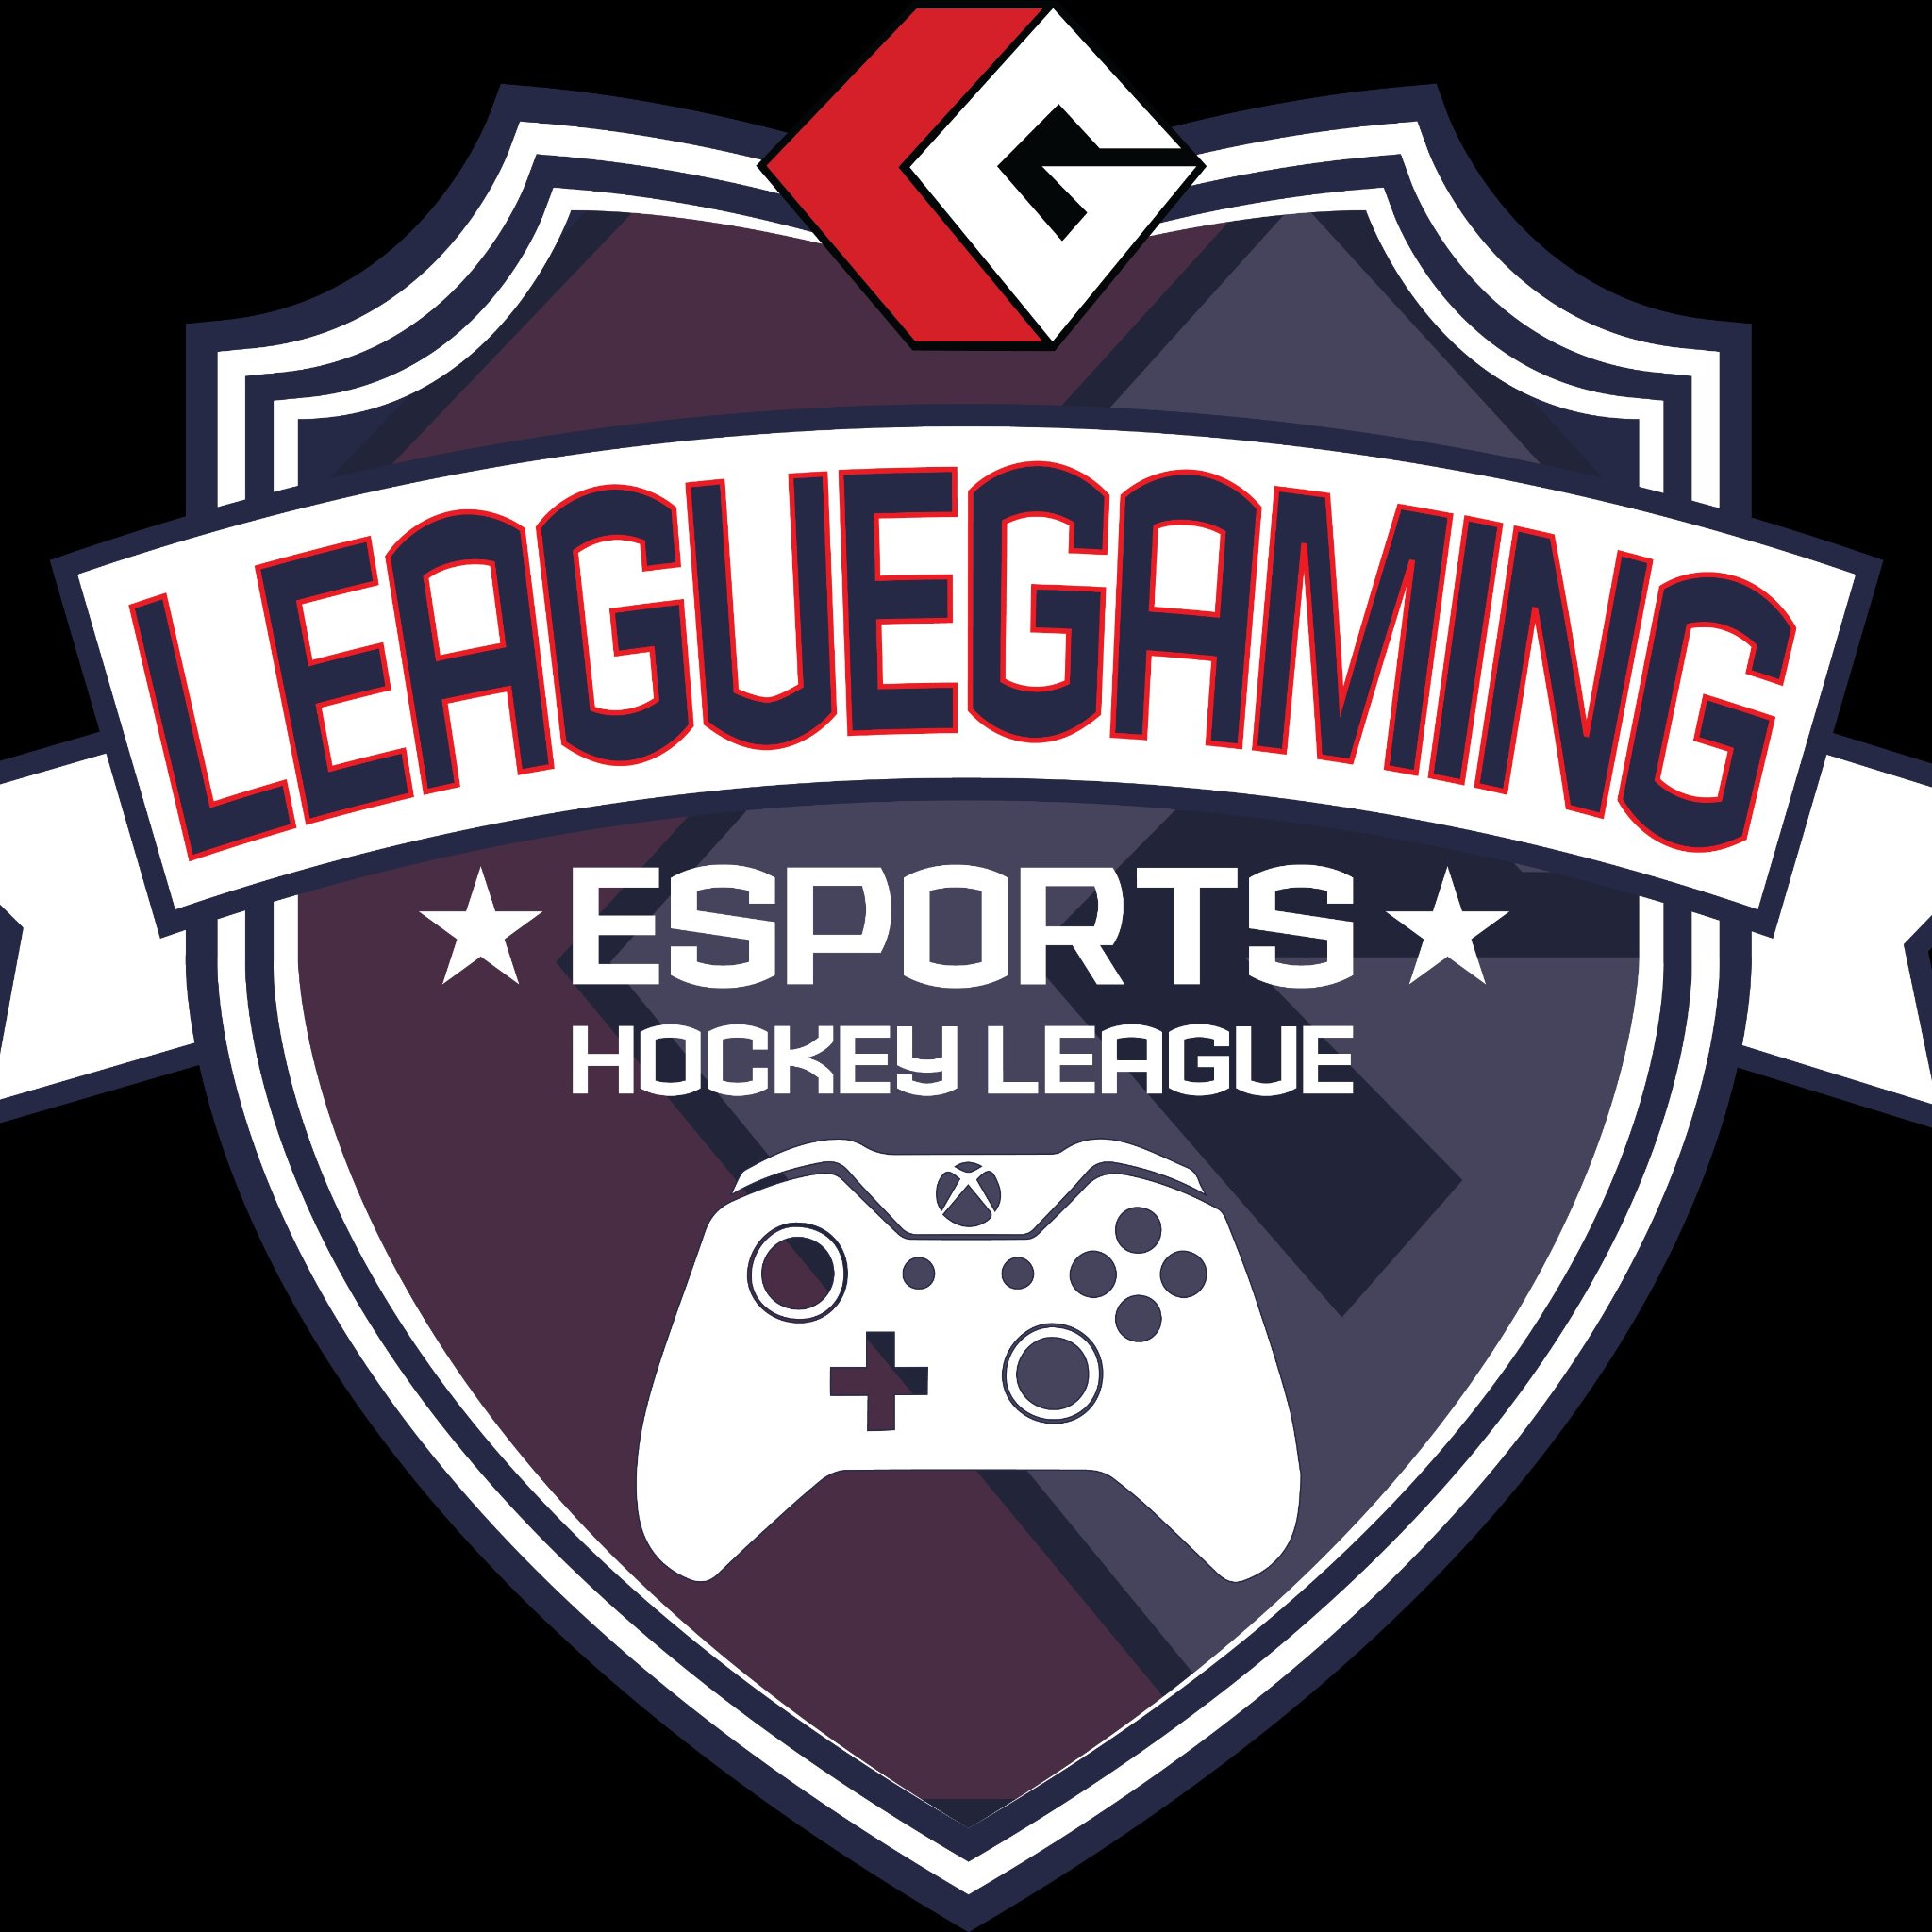 For all League Gaming Esports News, follow @leaguegaming and @_LG_McDonald